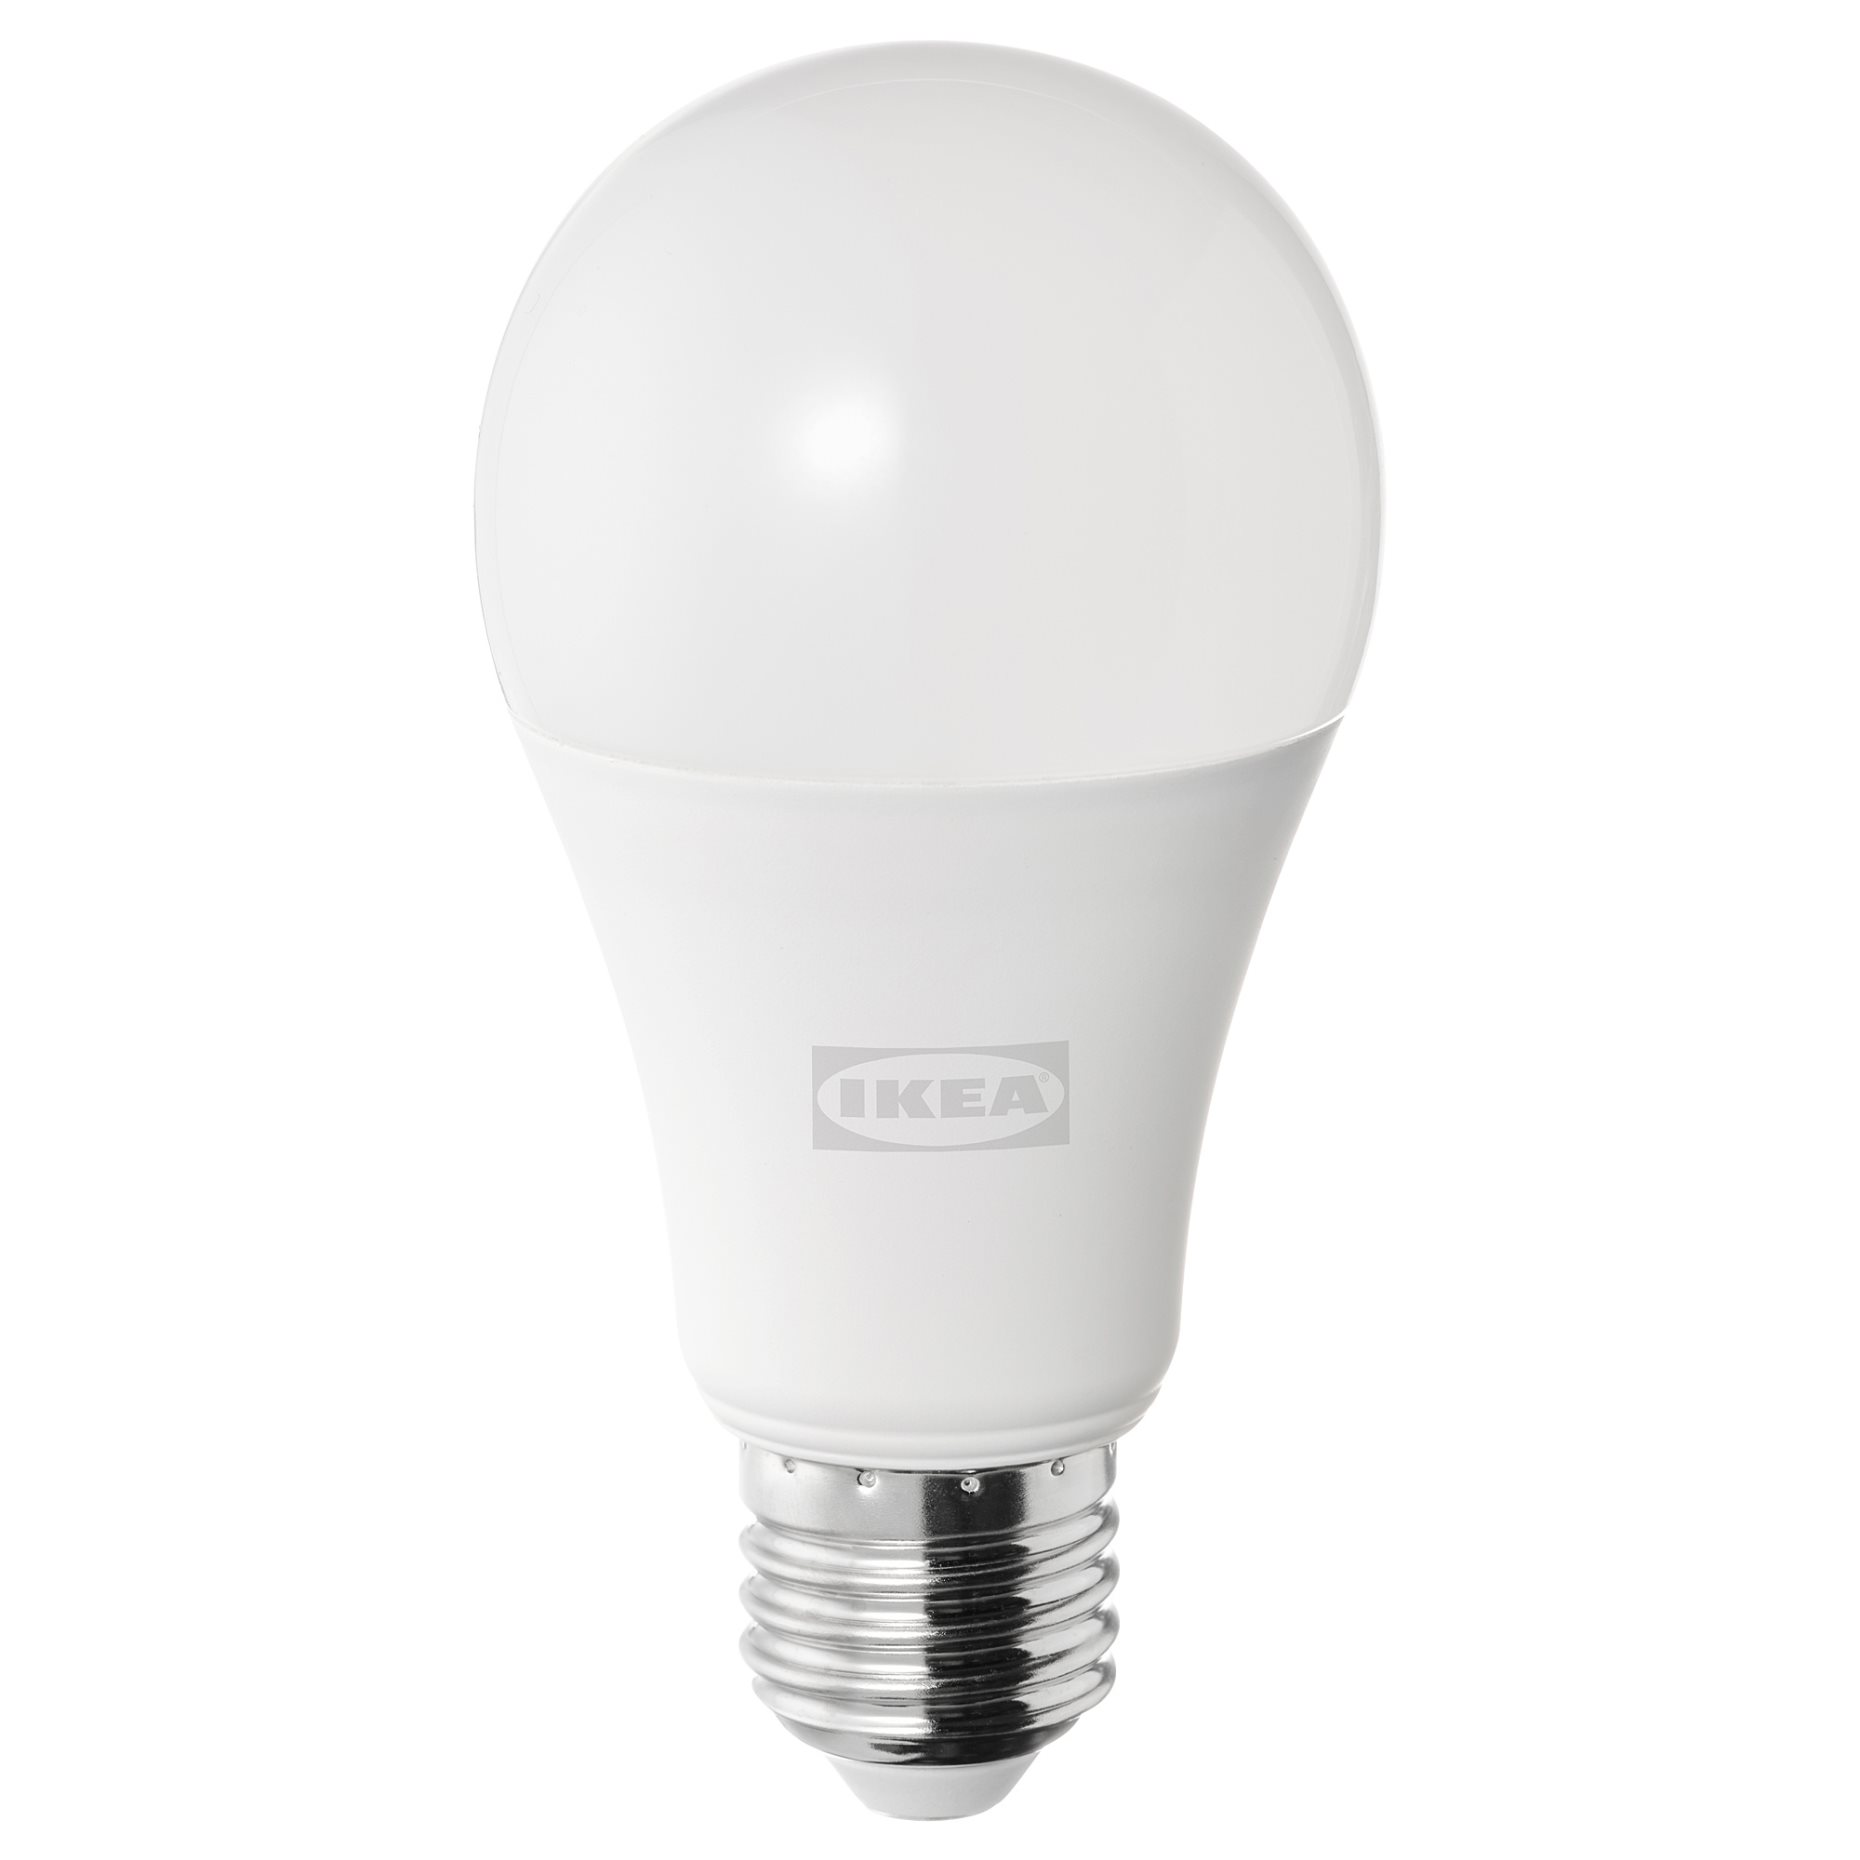 SOLHETTA, λαμπτήρας LED E27 1521 lumen με δυνατότητα ασύρματης ρύθμισης/γλόμπος,, 205.099.93